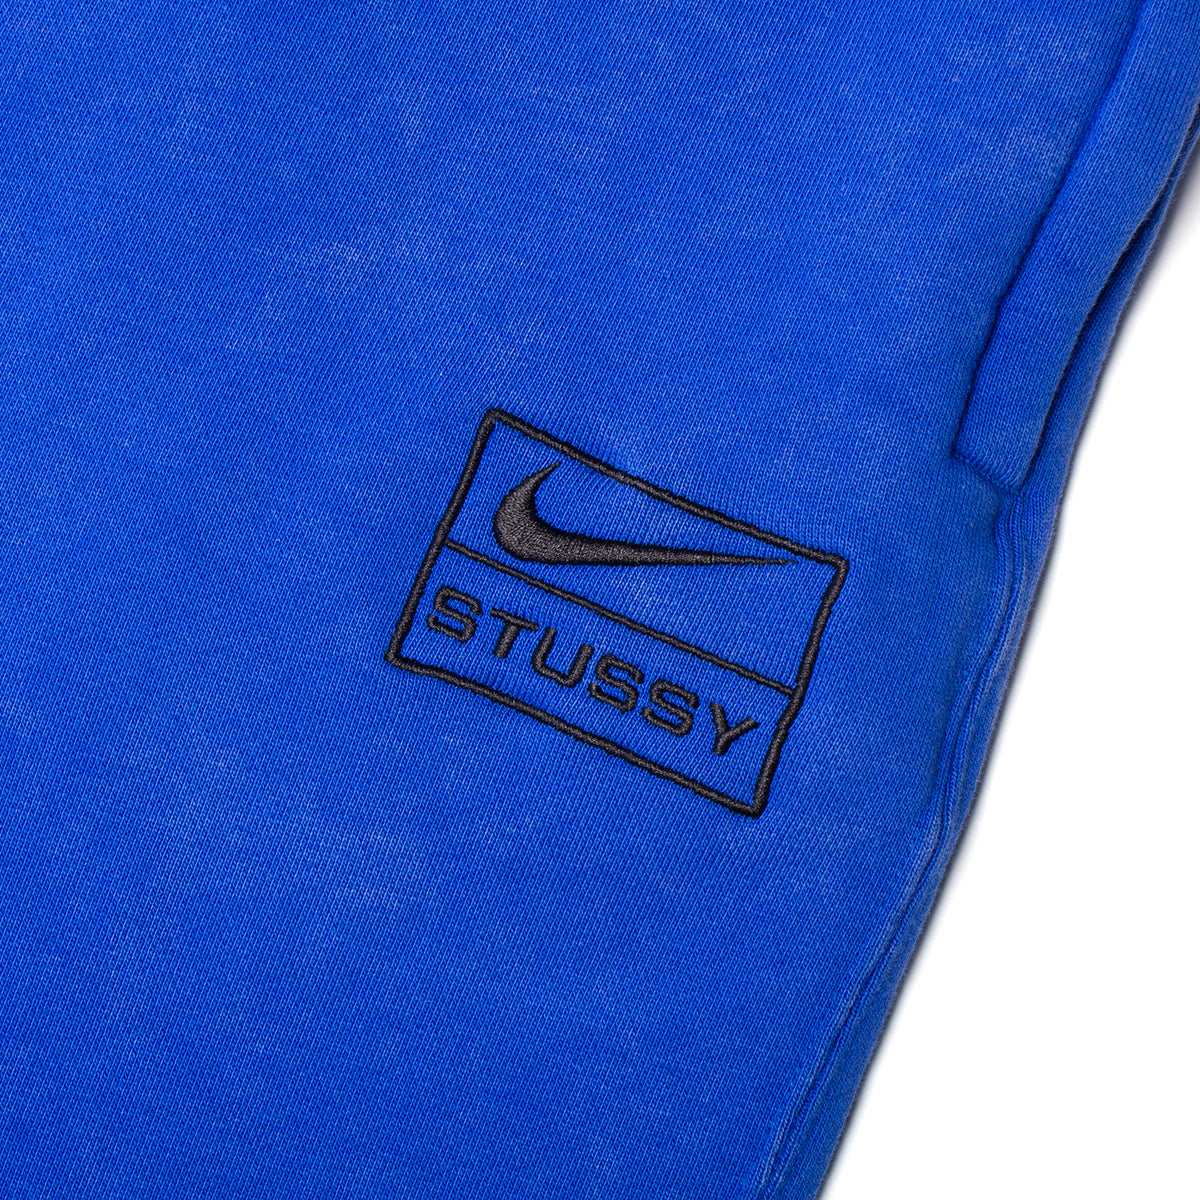 Buy Stussy x Nike Acid Wash Fleece Pant 'Blue' - DR4025480 BLUE